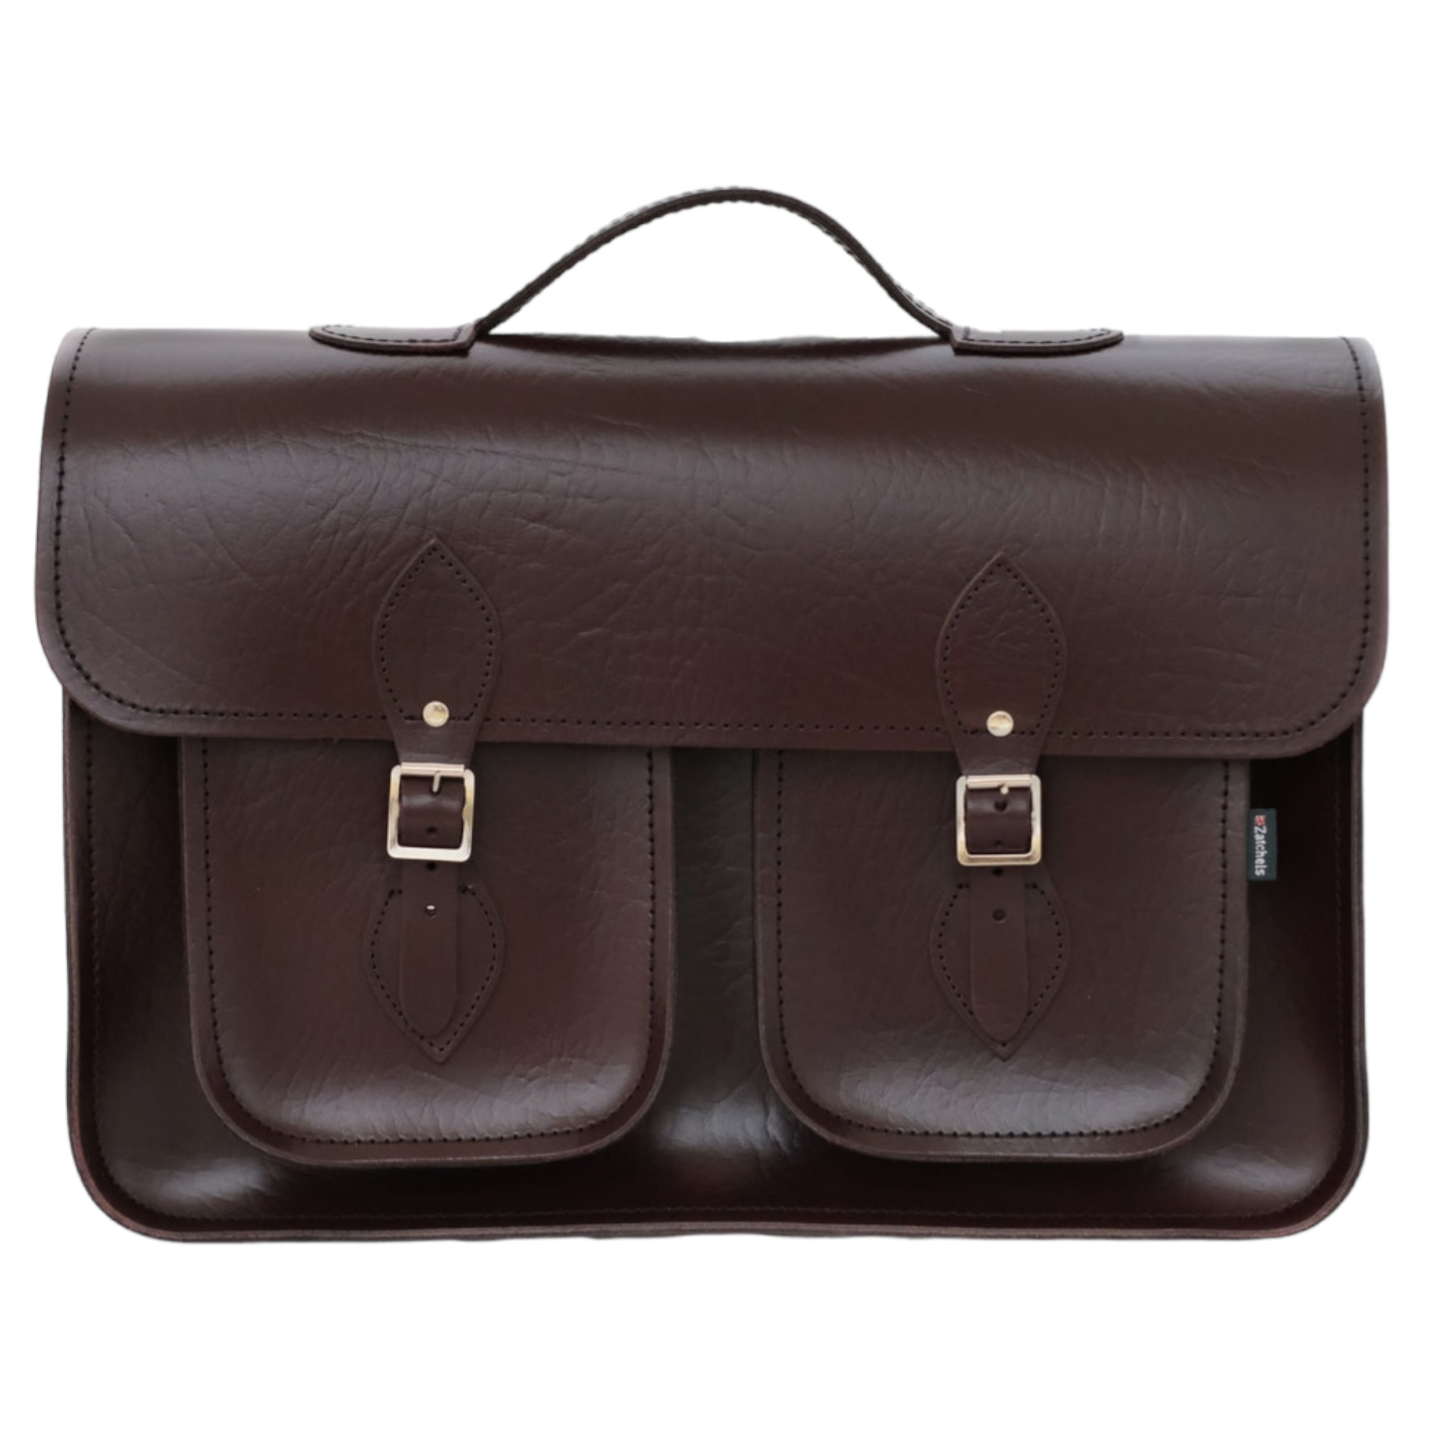 Twin Pocket Executive Handmade Leather Satchel - Marsala Red - 14.5"